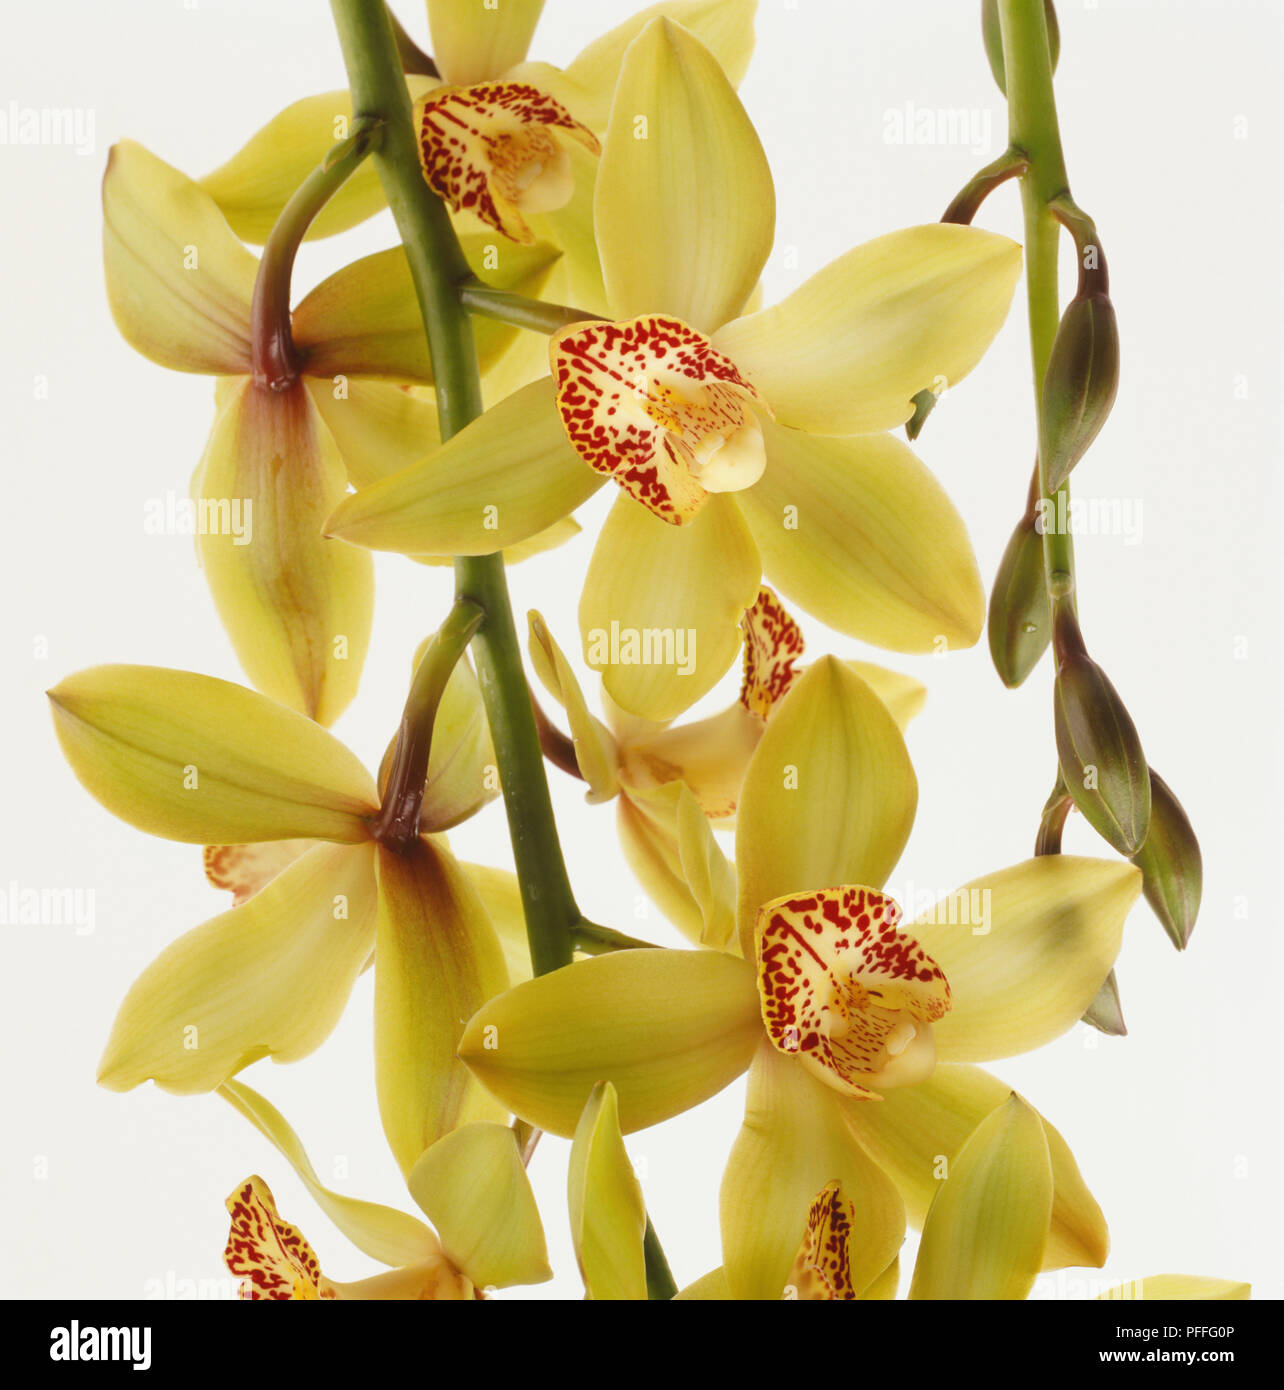 Blass gelbe Blume von Cymbidium Orchidee, Nahaufnahme, getupft lila Center. Stockfoto